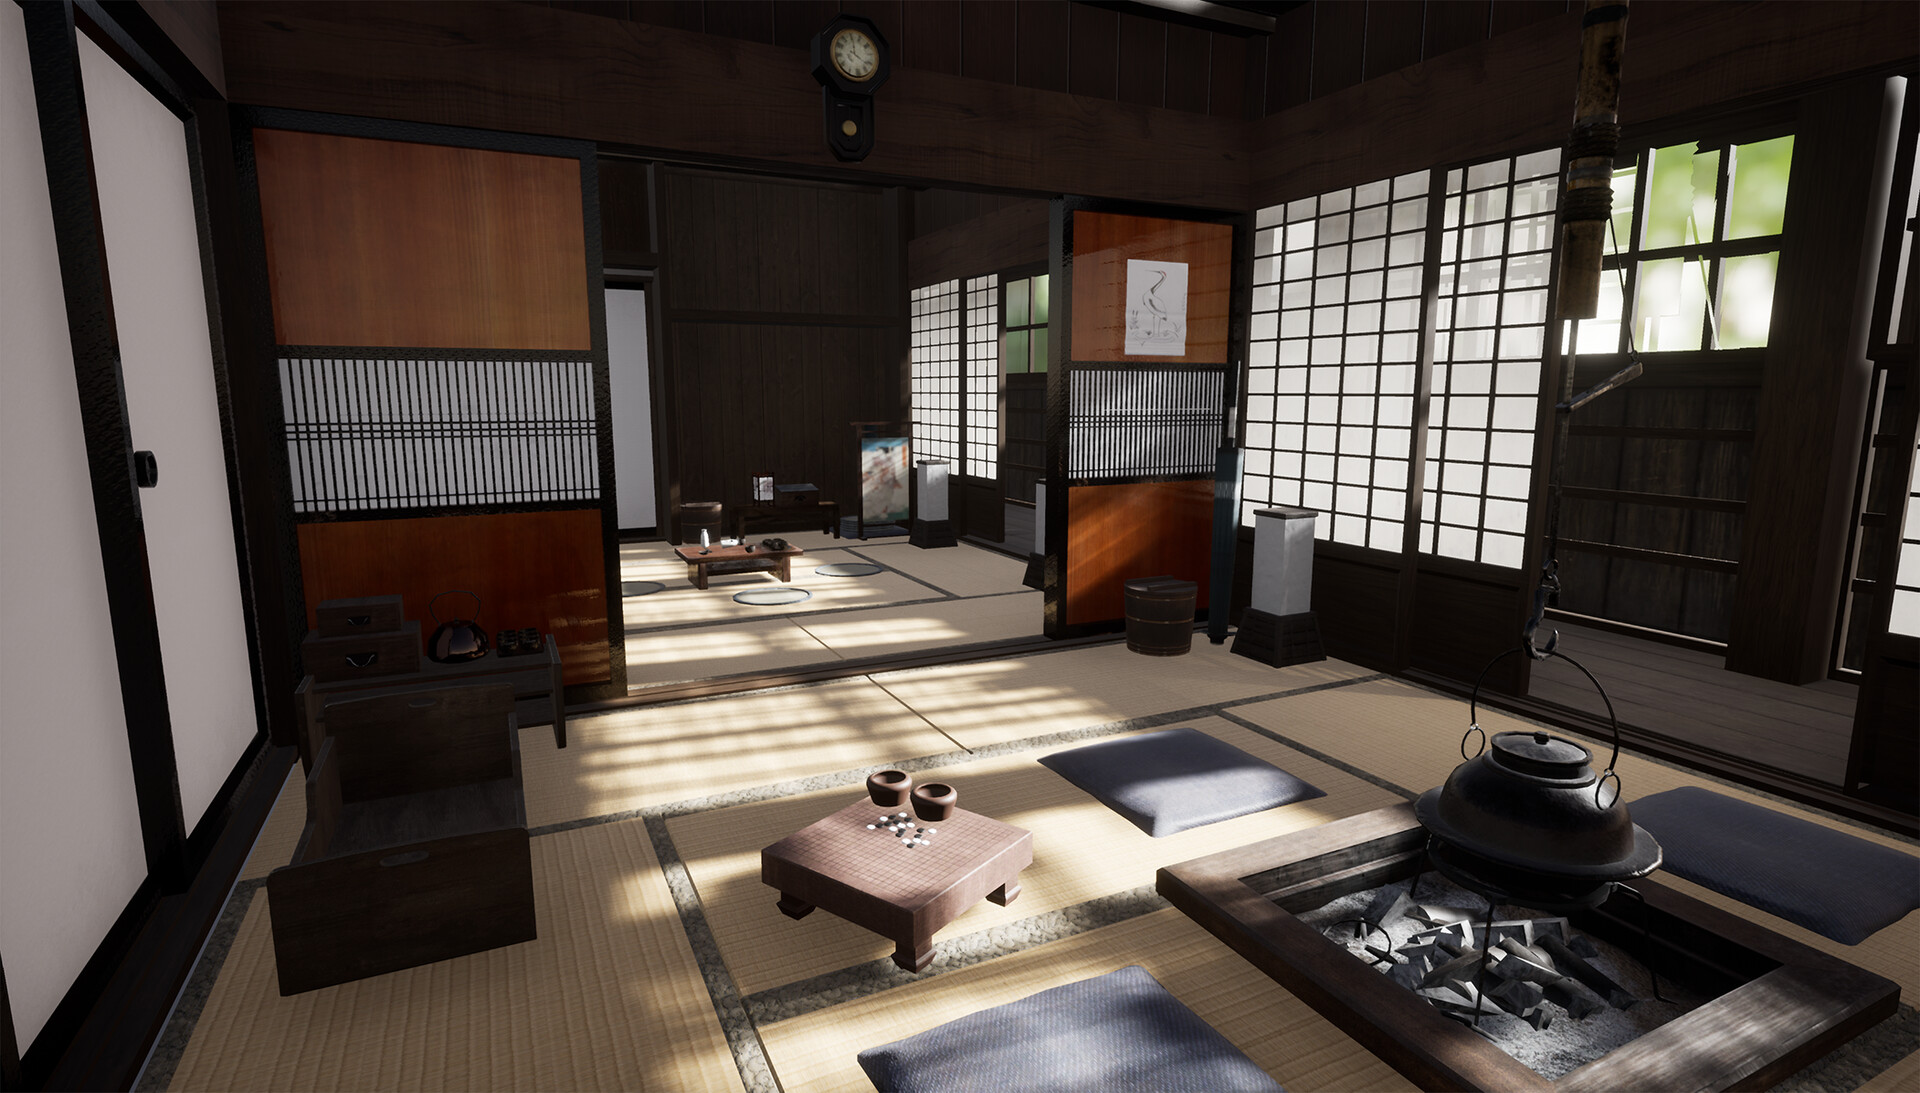 ArtStation - Japanese Room2